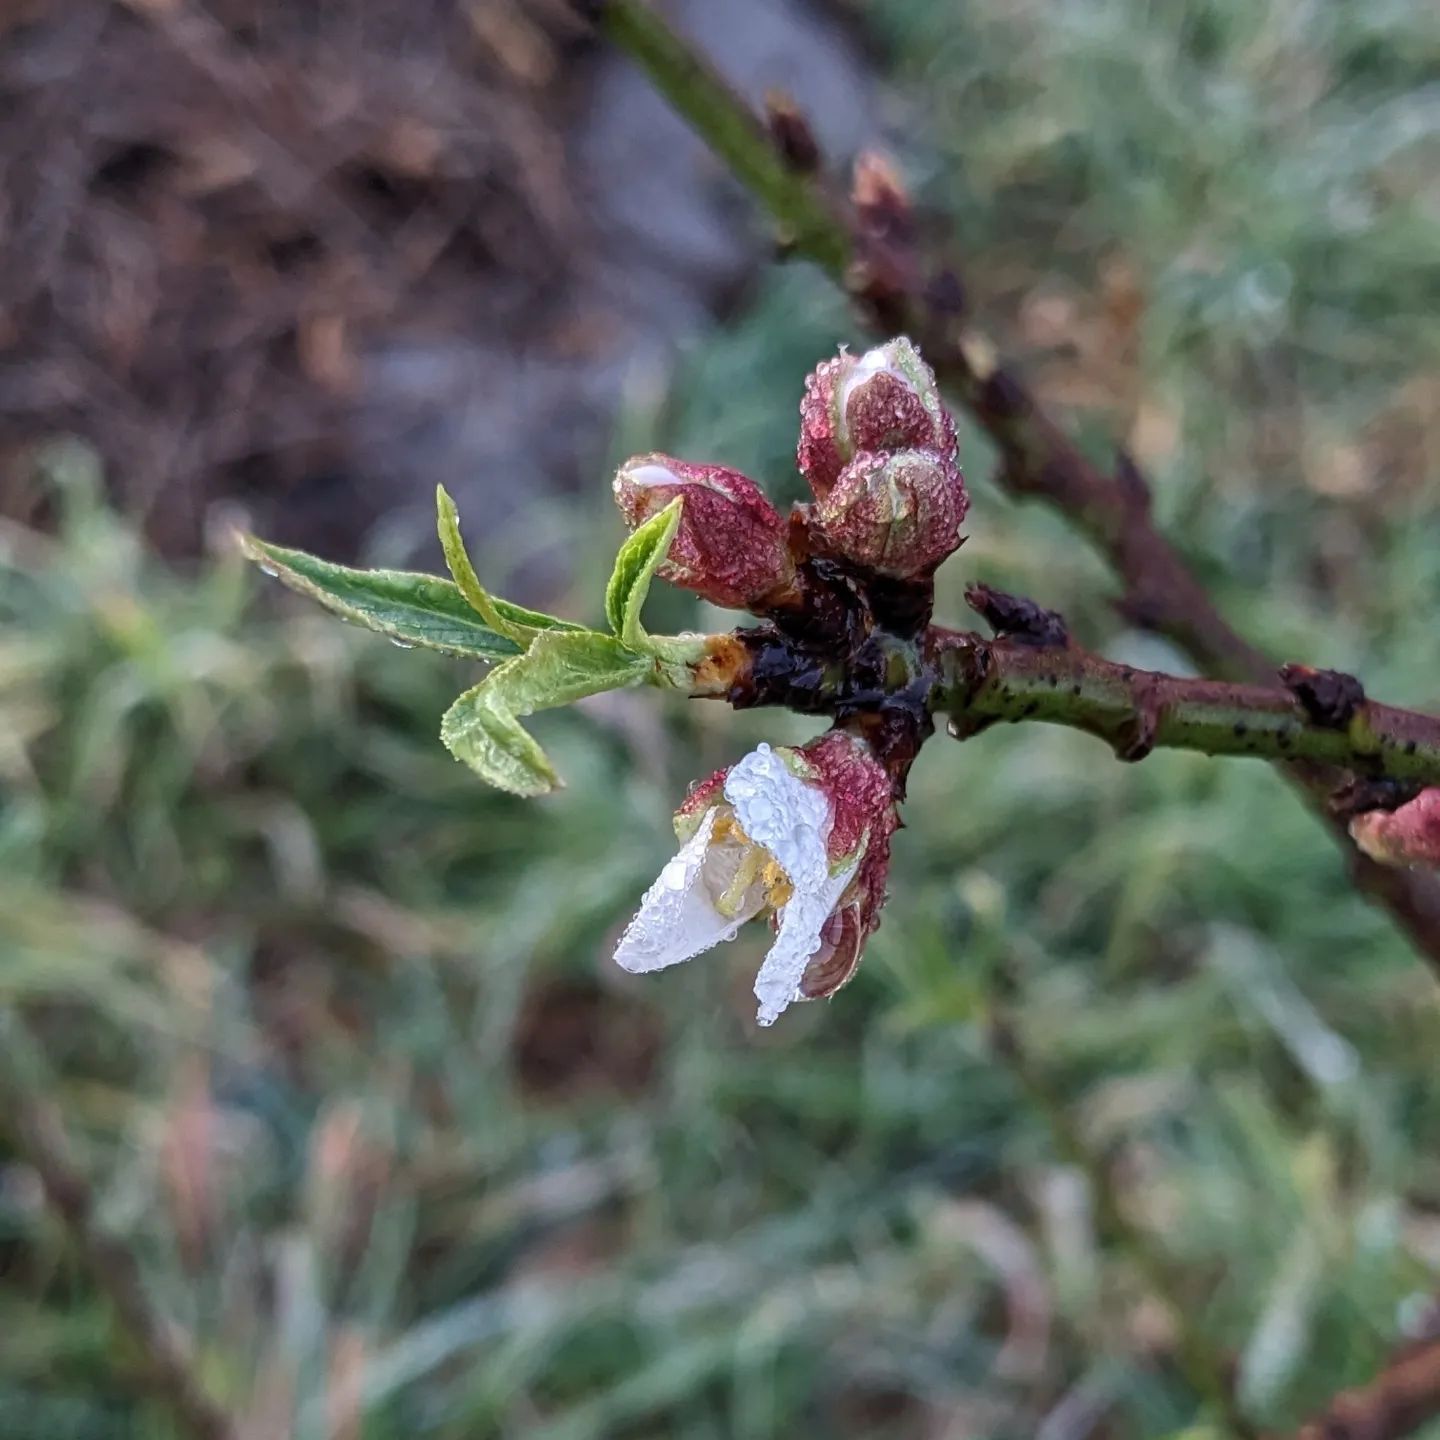 Last night's light frost melting off this almond tree flower